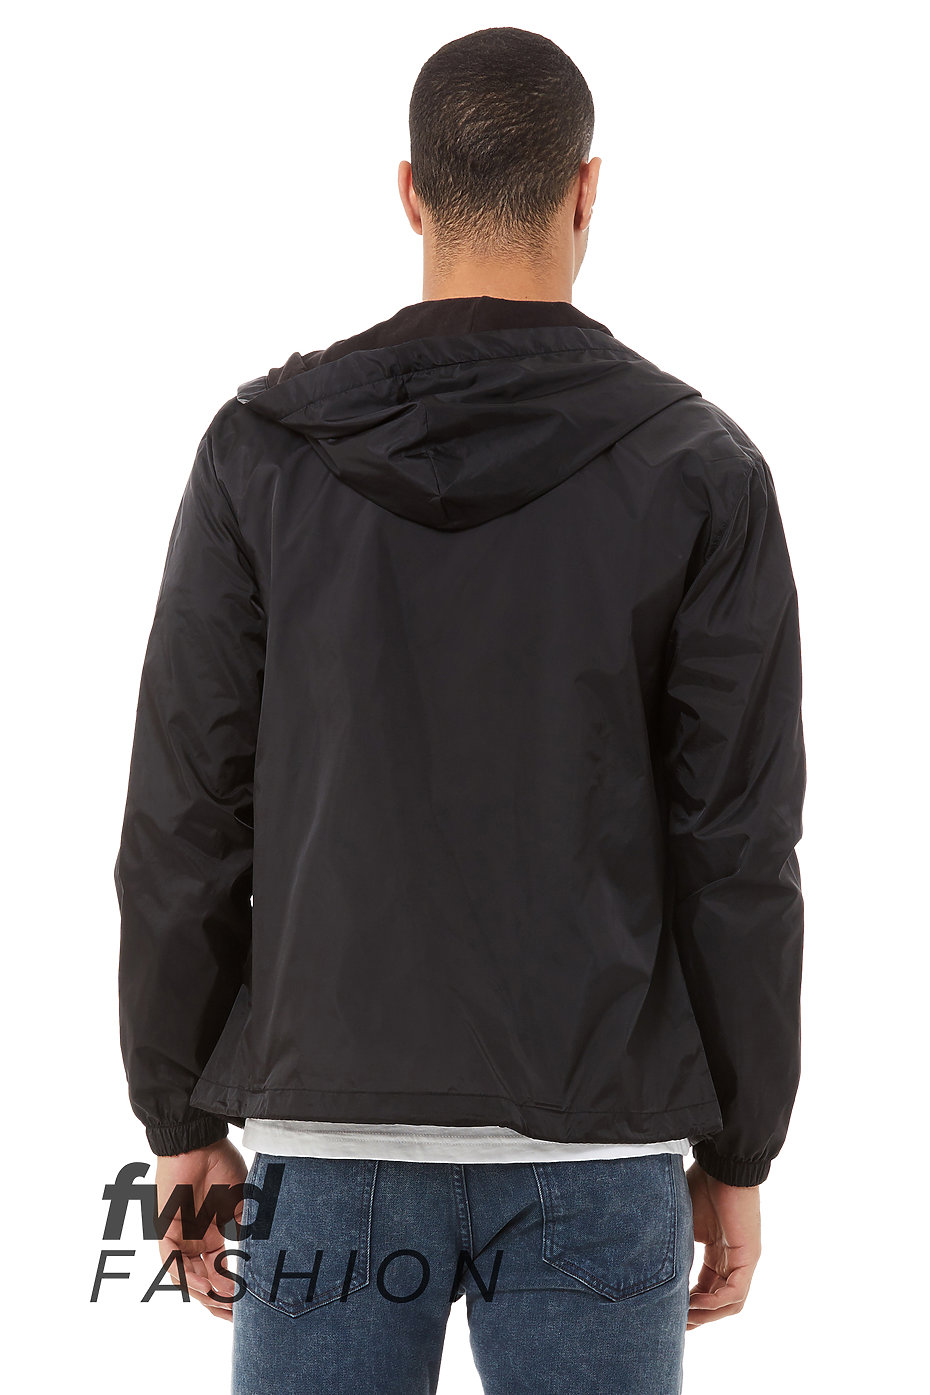 Custom Coaches Jacket | Mens Wholesale Clothing | Jackets For Men 